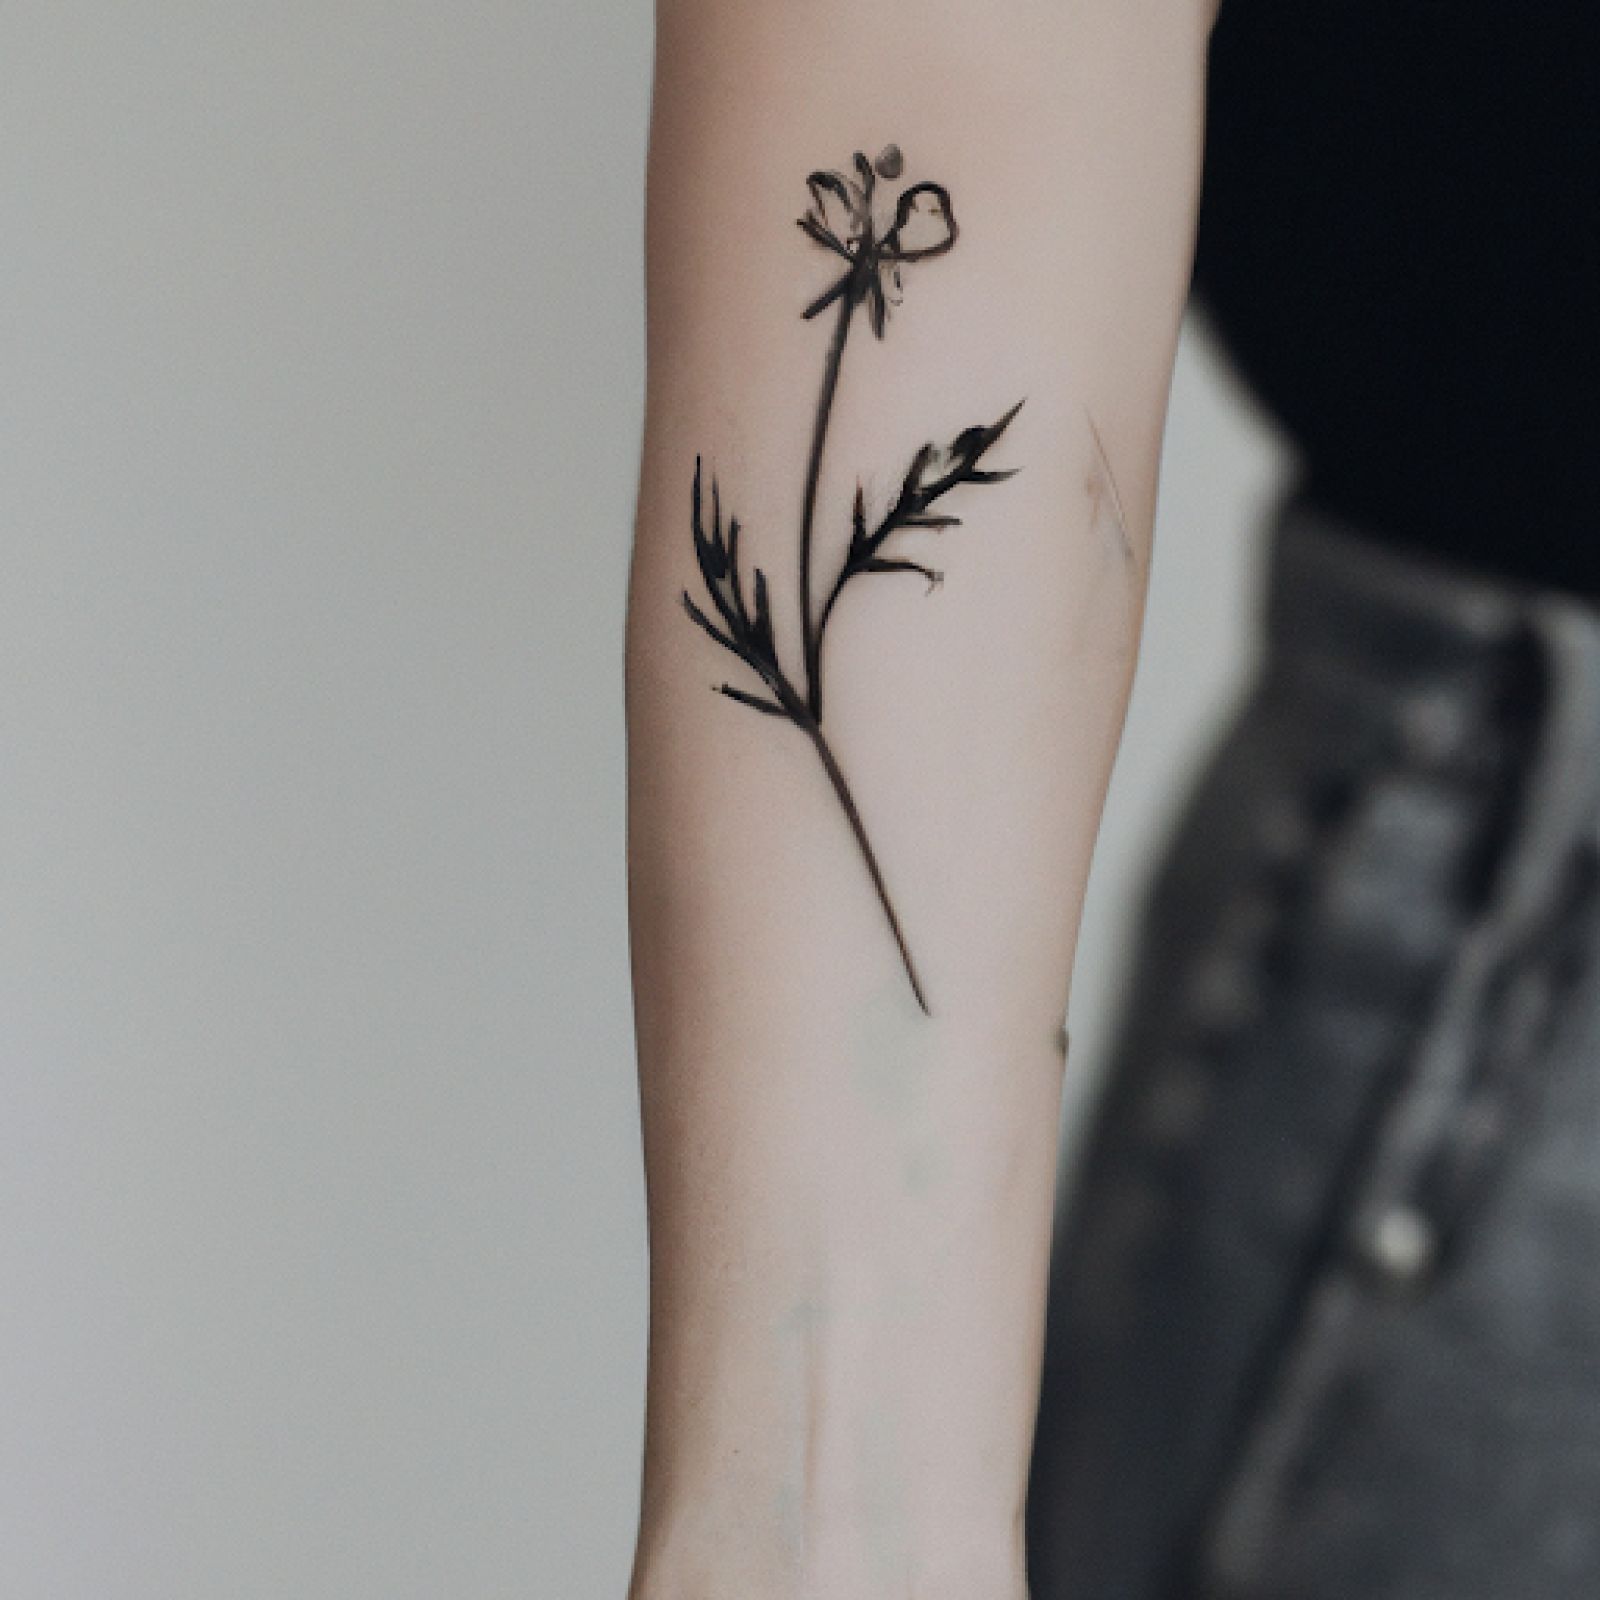 Flower tattoo on arm for women